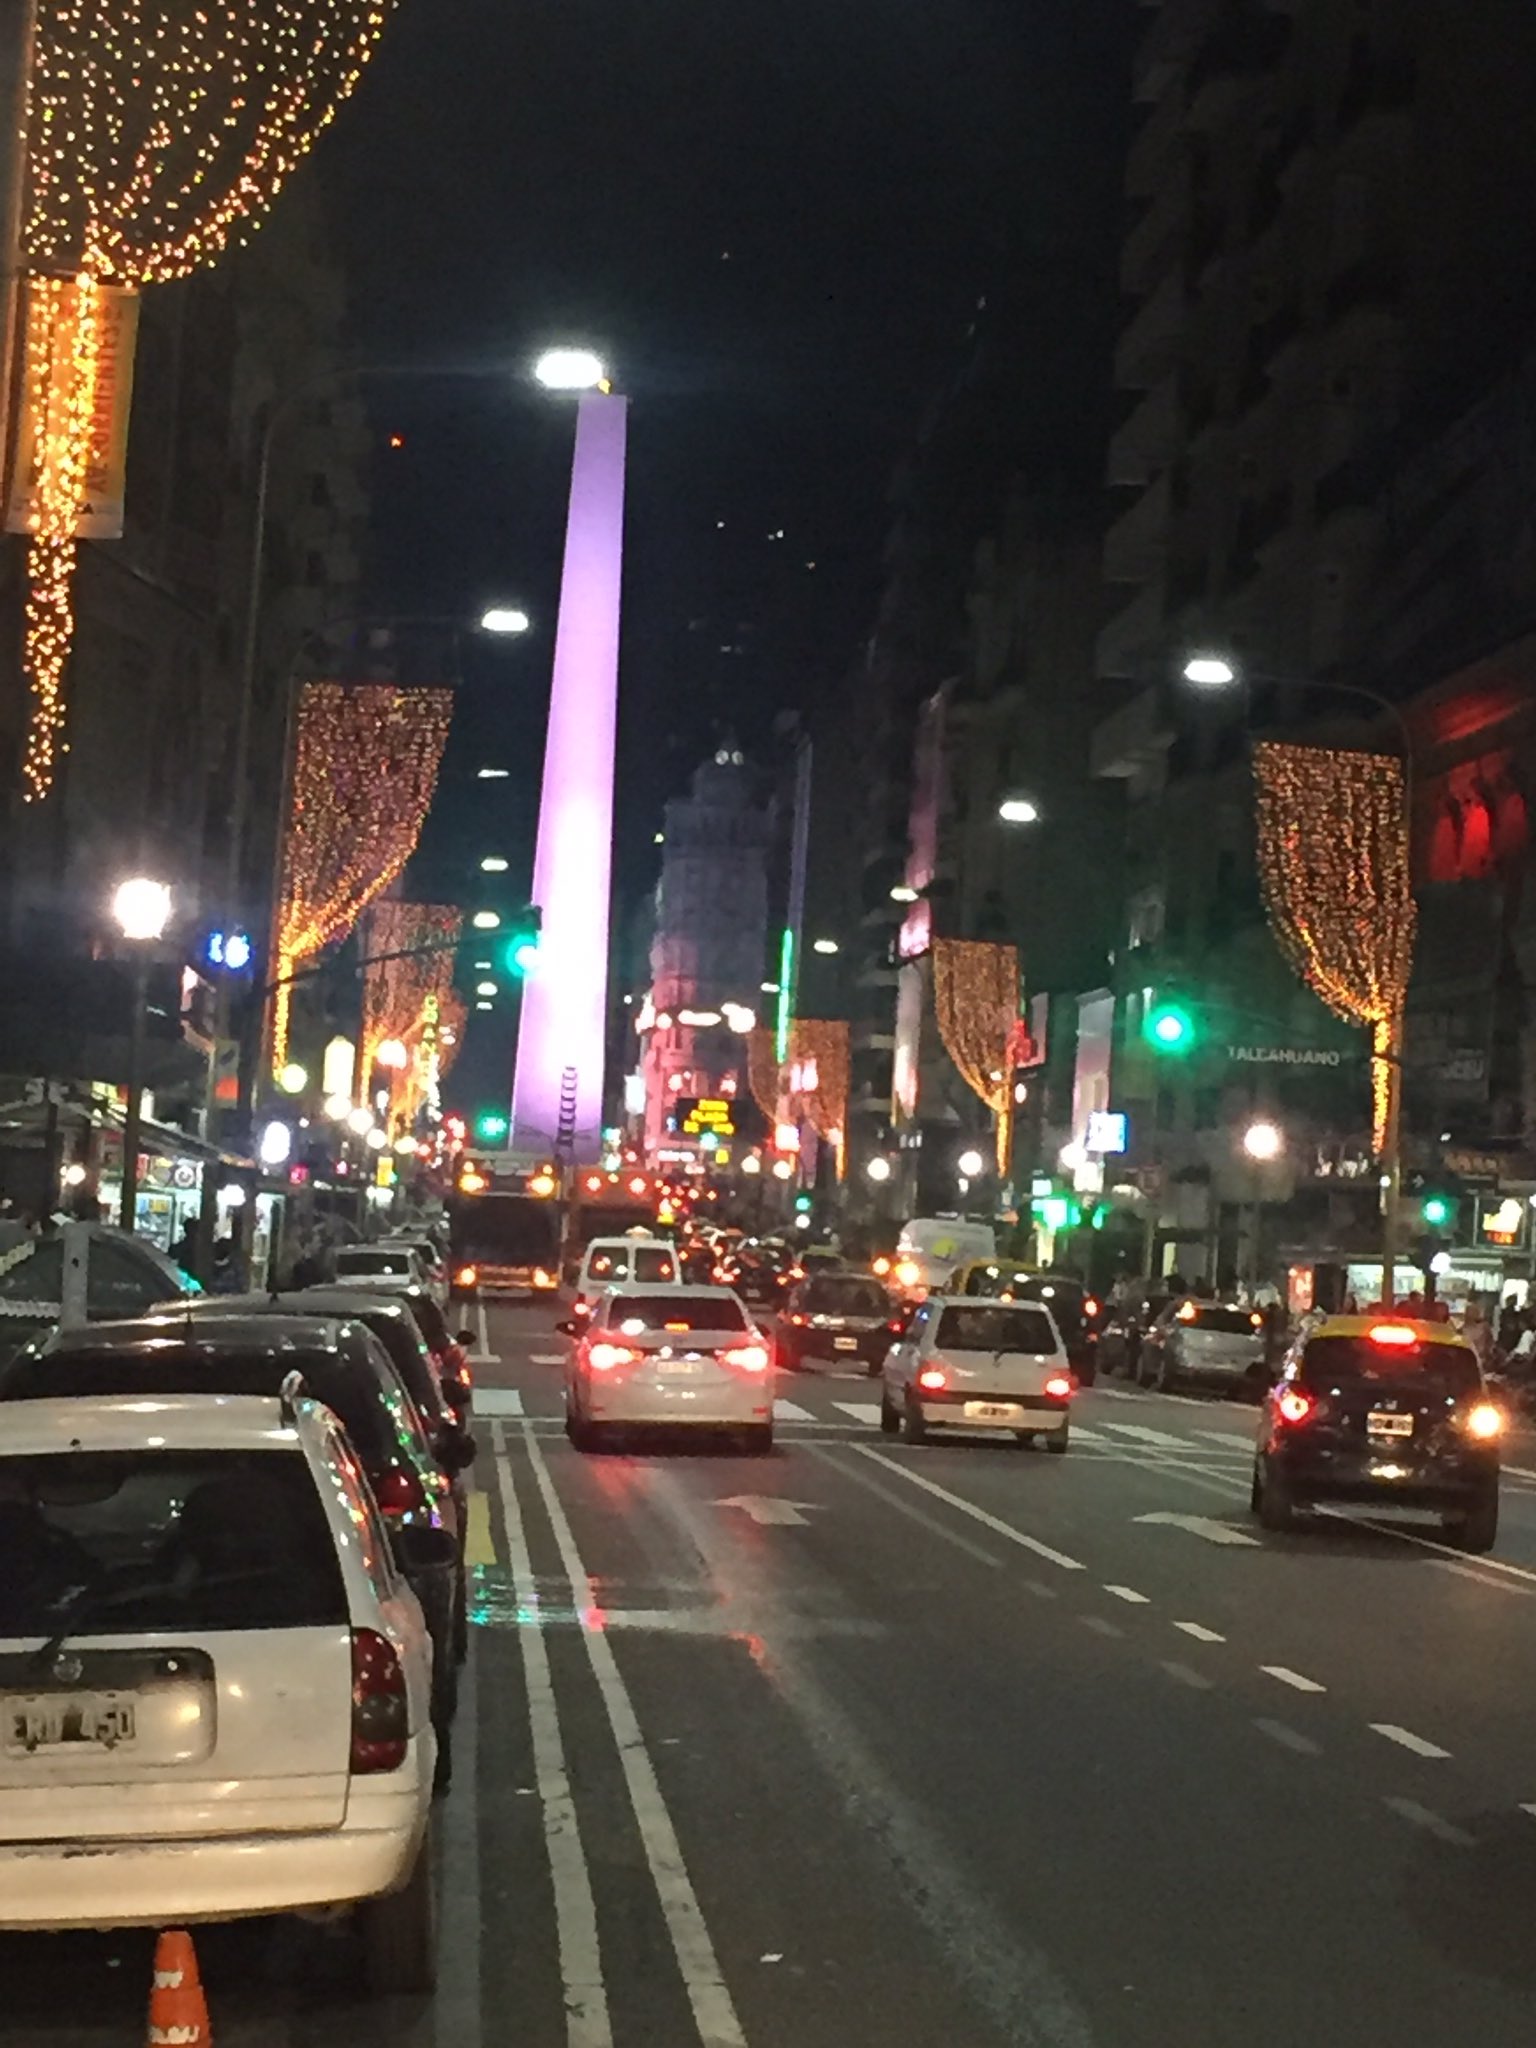 Noche Porteña. Mi Buenos Aires querido #Pasion https://t.co/isV7Jwm1Cz